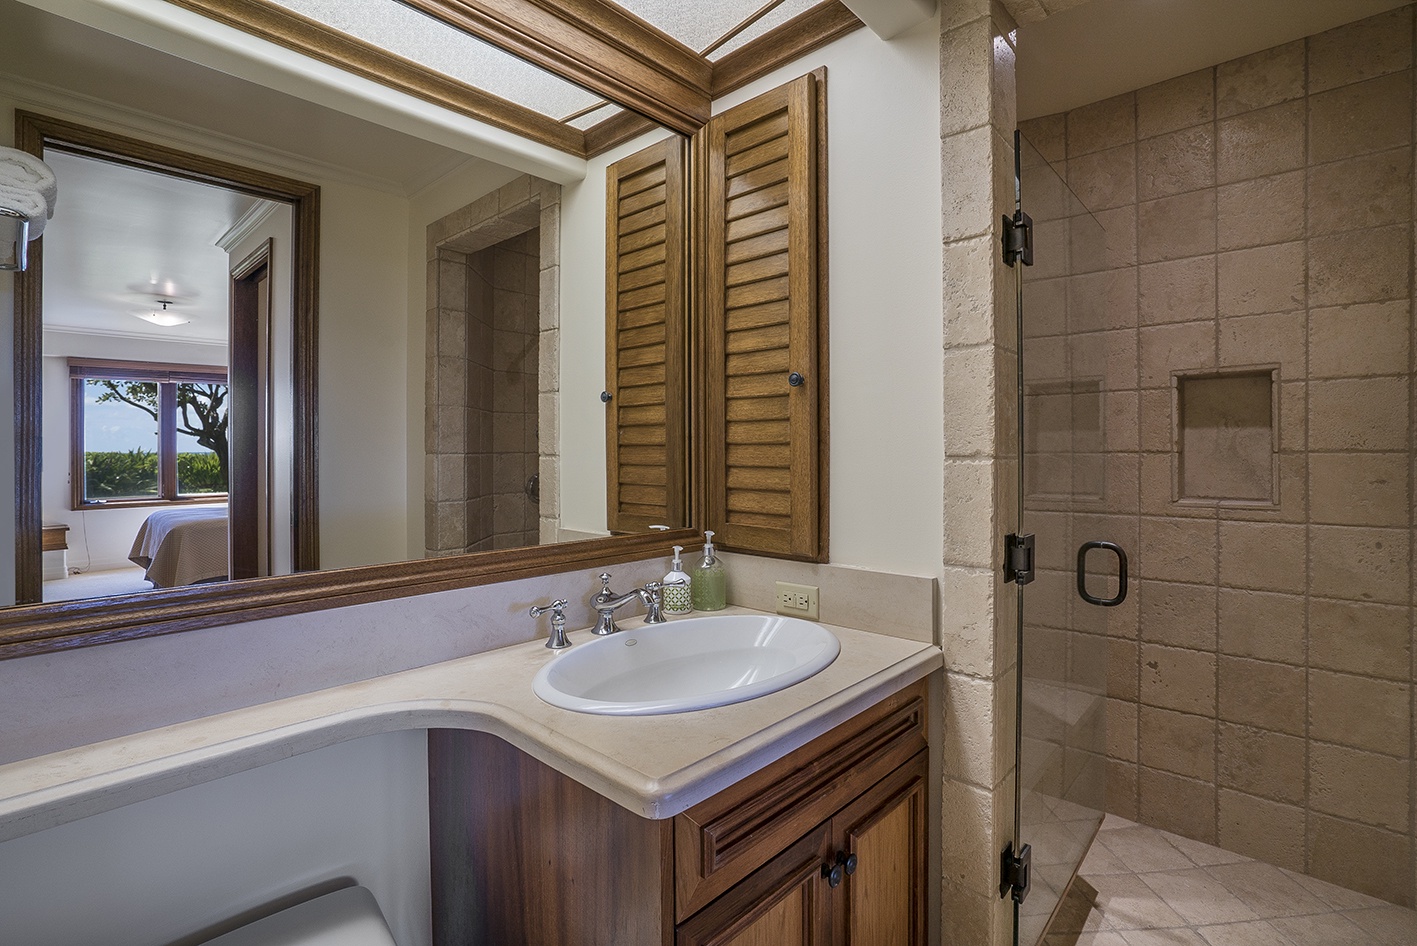 Kailua Vacation Rentals, Kailua's Kai Moena Estate - Main house: Guest Bedroom 1 ensuite bathroom with walk in shower.